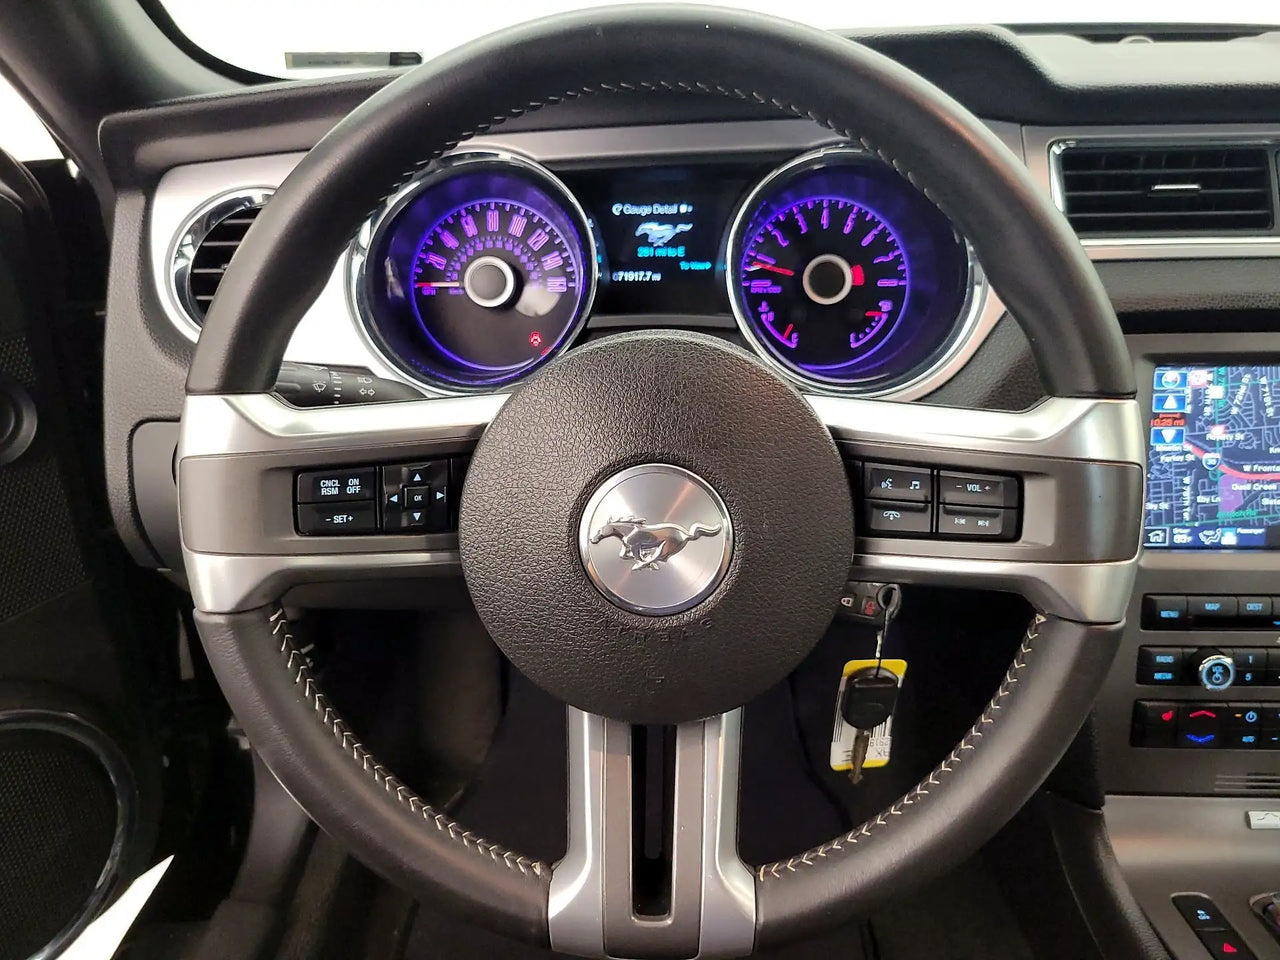 2014 Mustang